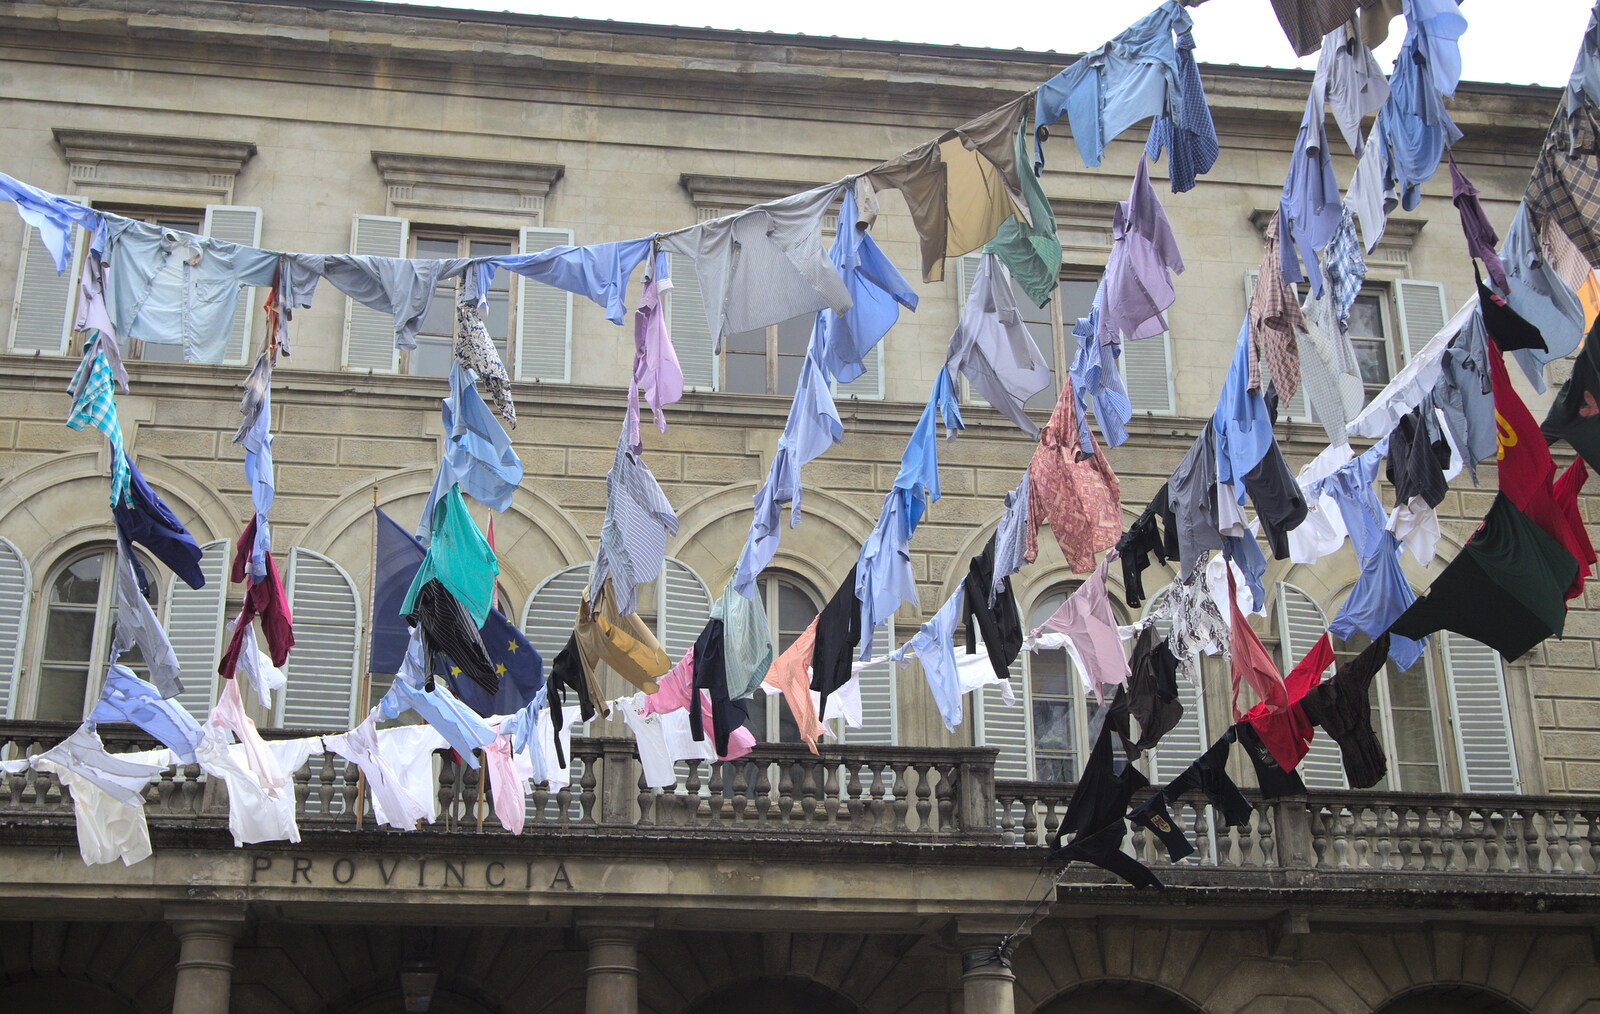 Marconi, Arezzo and the Sagra del Maccherone Festival, Battifolle, Tuscany - 9th June 2013: There are clothes-line installations all over town